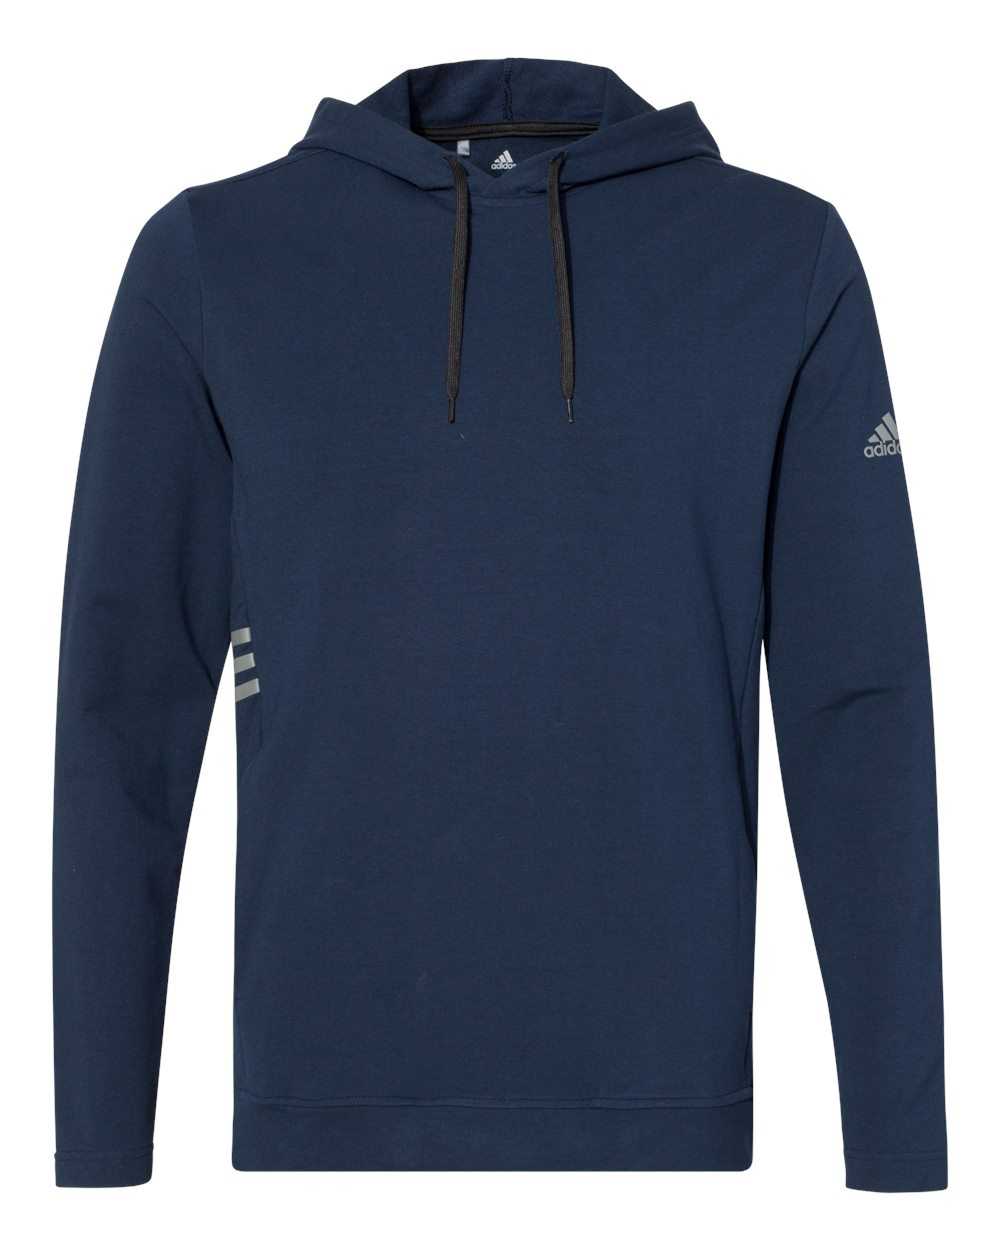 Adidas A450 Lightweight Hooded Sweatshirt - Collegiate Navy - HIT a Double